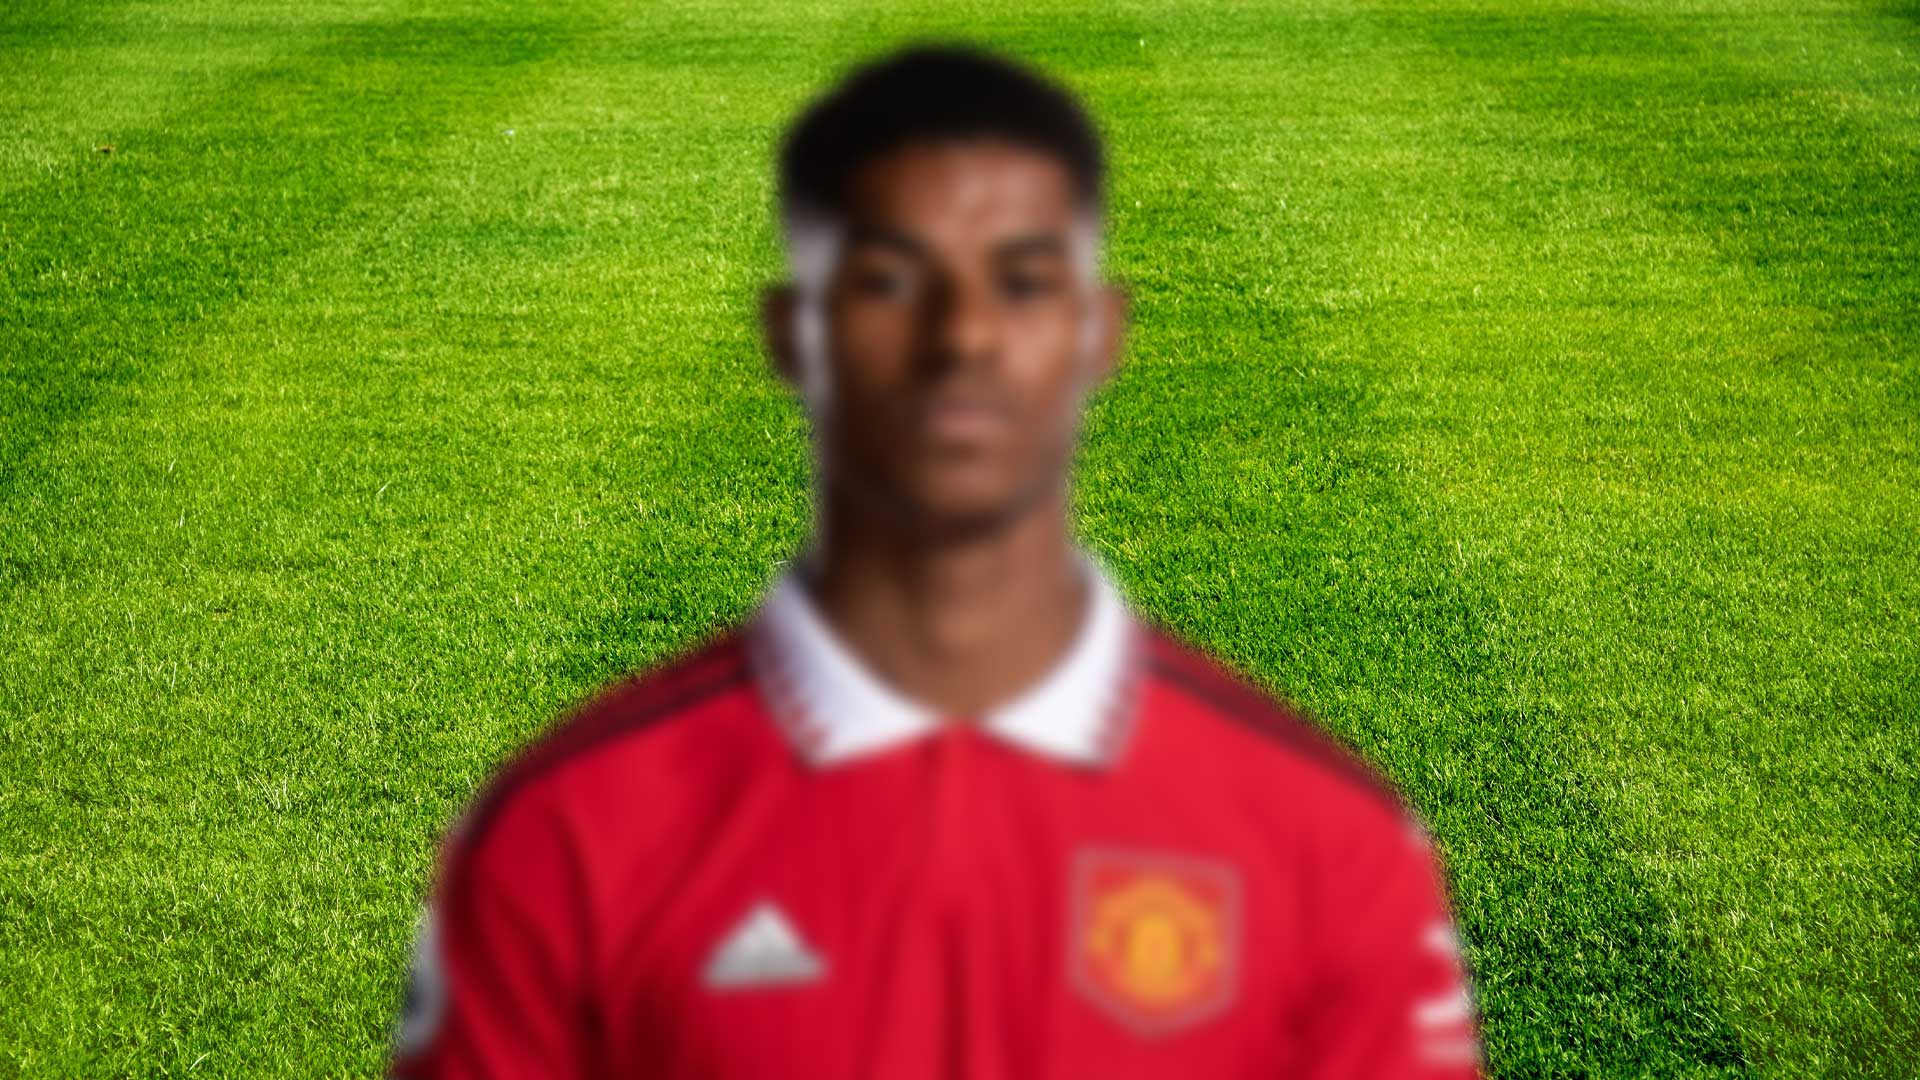 A blurred Man Utd player